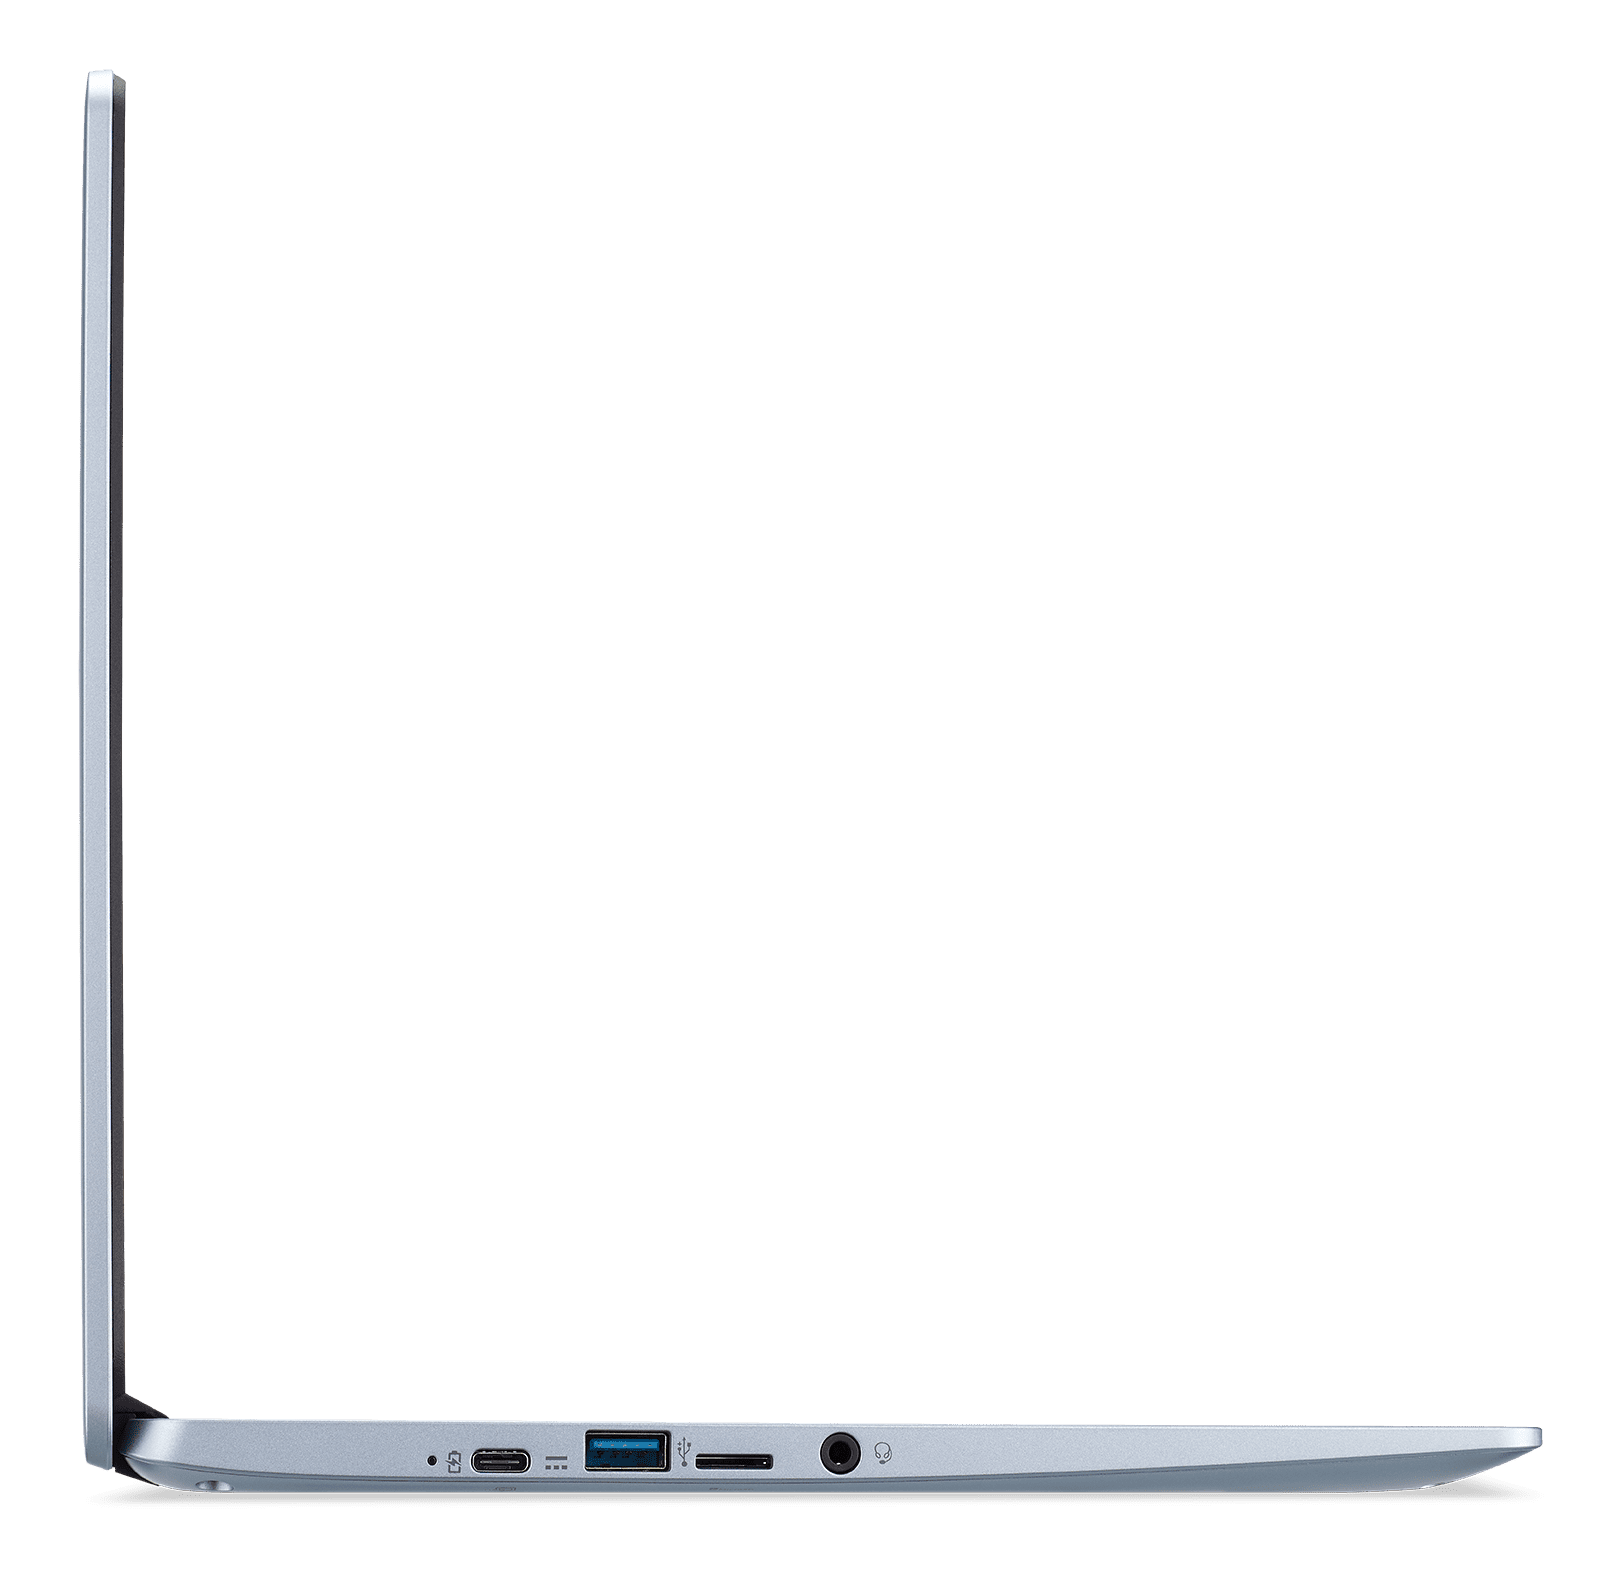 Acer Chromebook 314, Intel Celeron N4020, 14